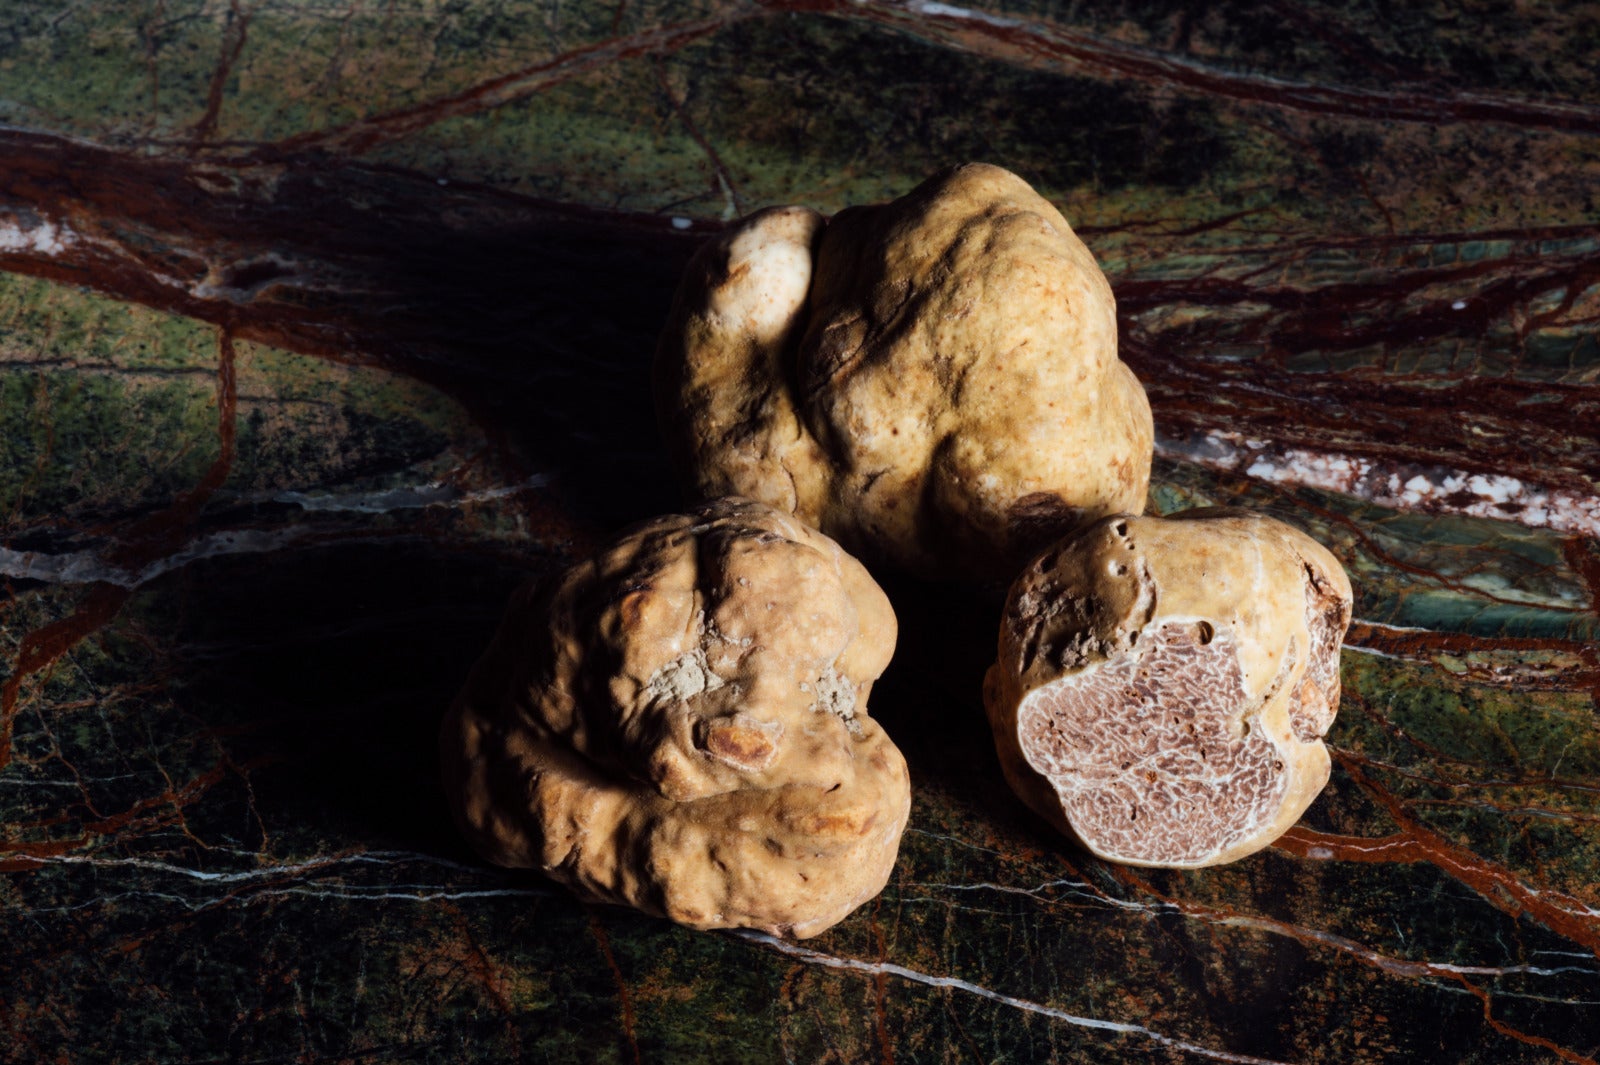 white truffle